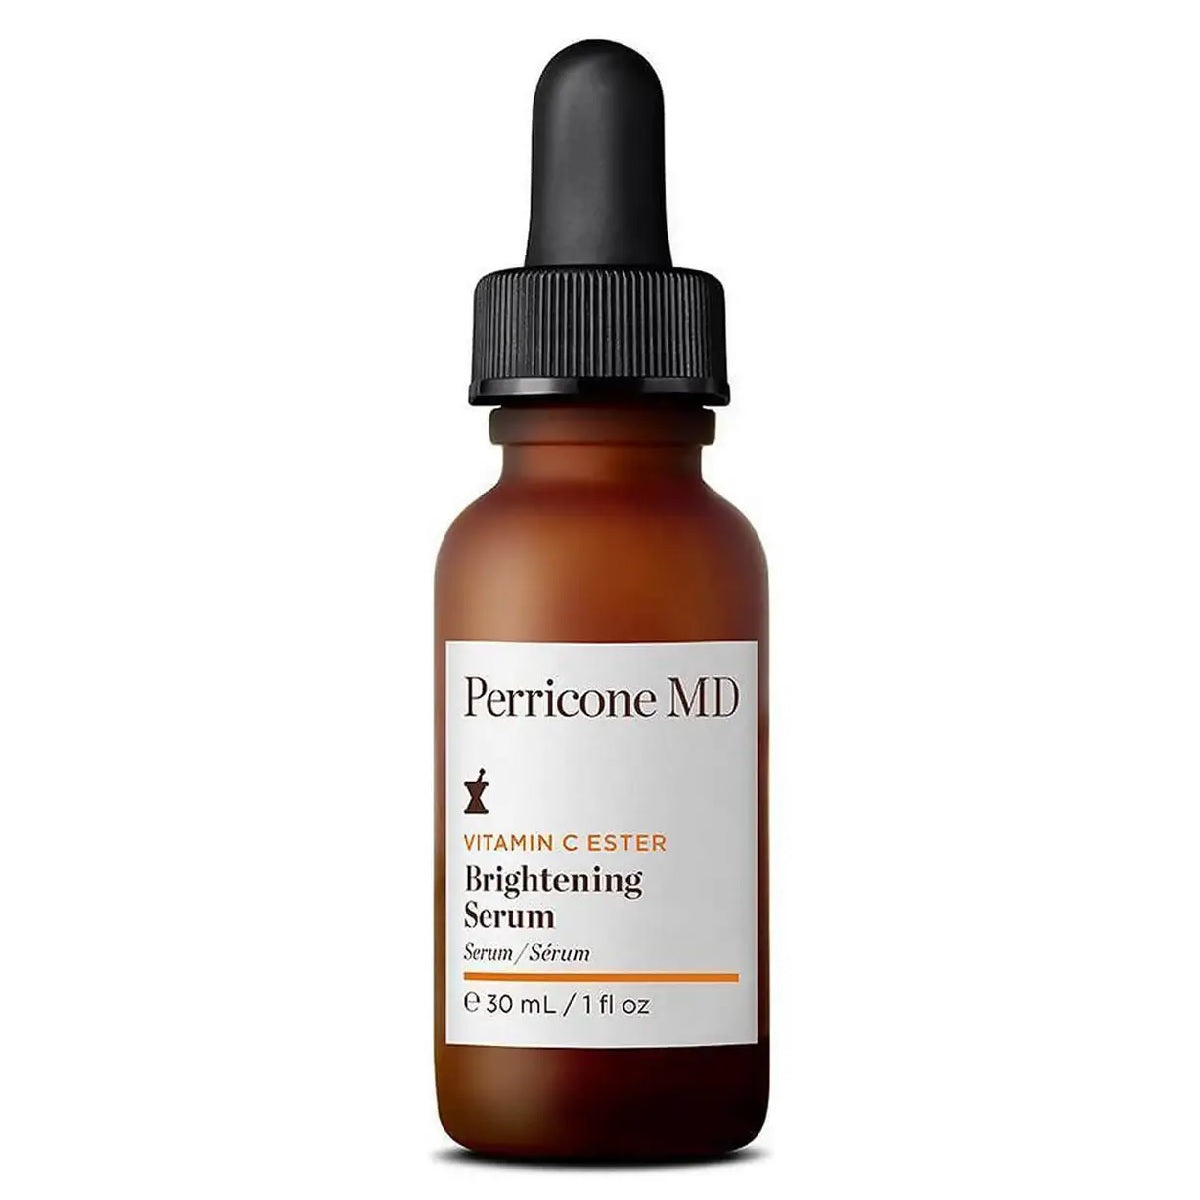 Perricone MD Vitamin C Ester Brightening Serum 59ml - Feel Gorgeous